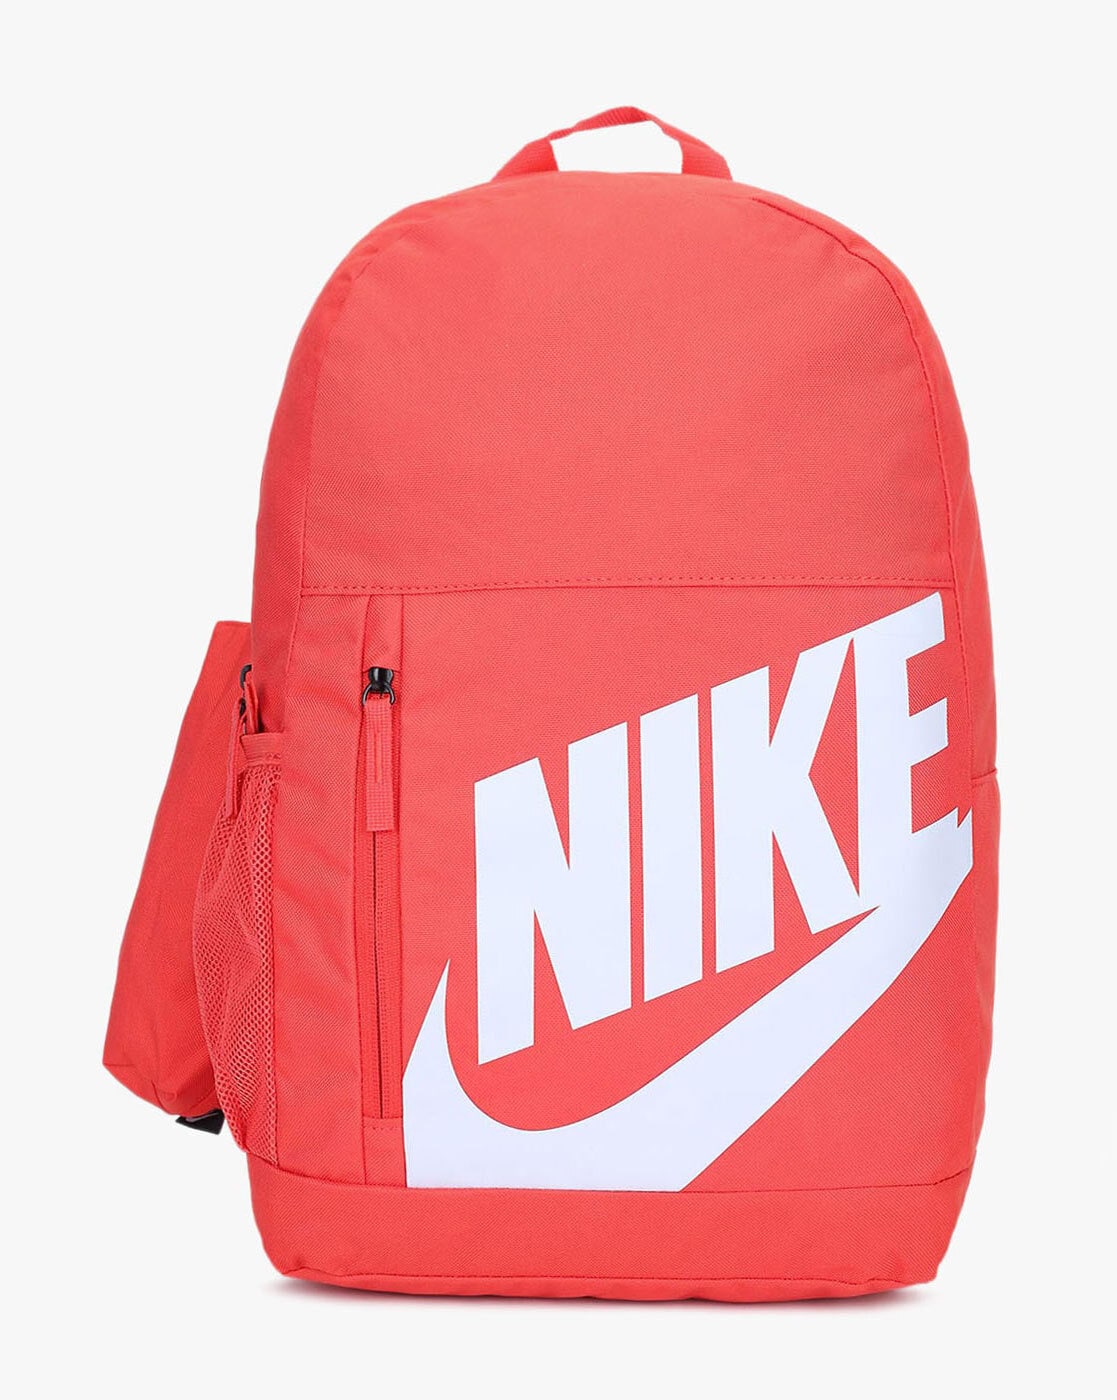 Nike Academy Team Backpack - University Red - SoccerPro